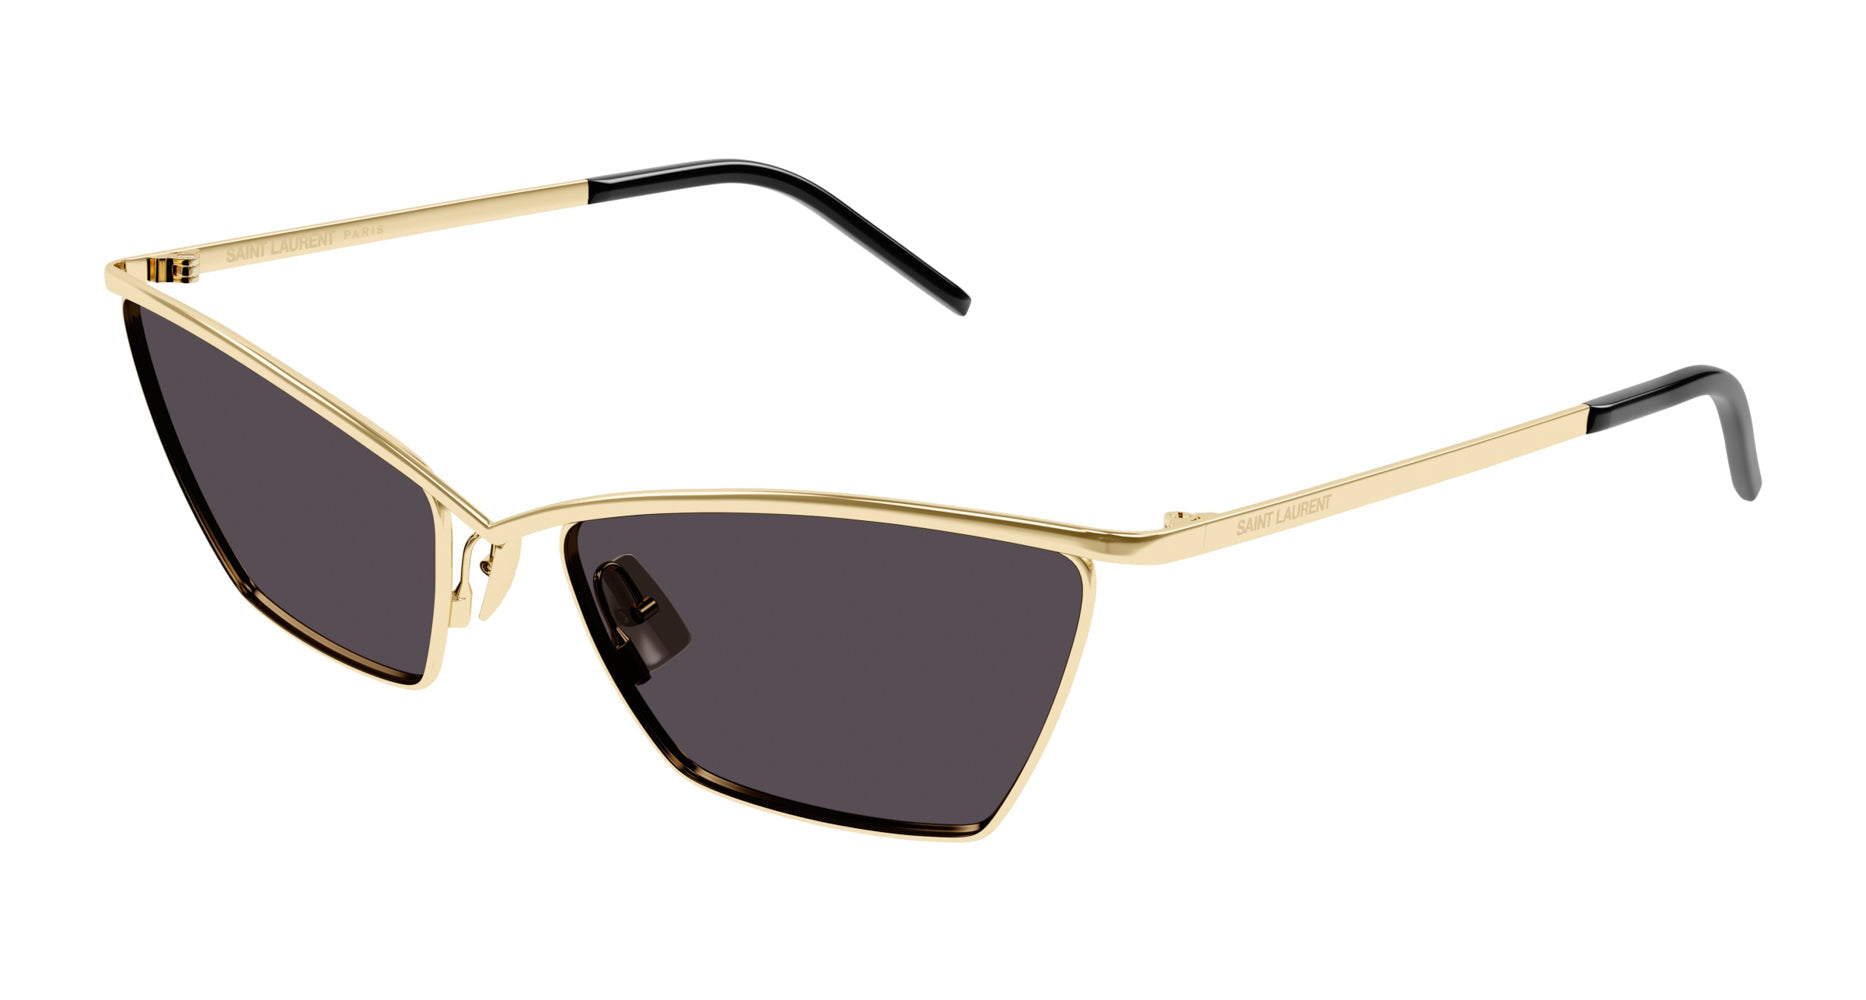 YSL Gold Rim Cat Eye Sunglasses